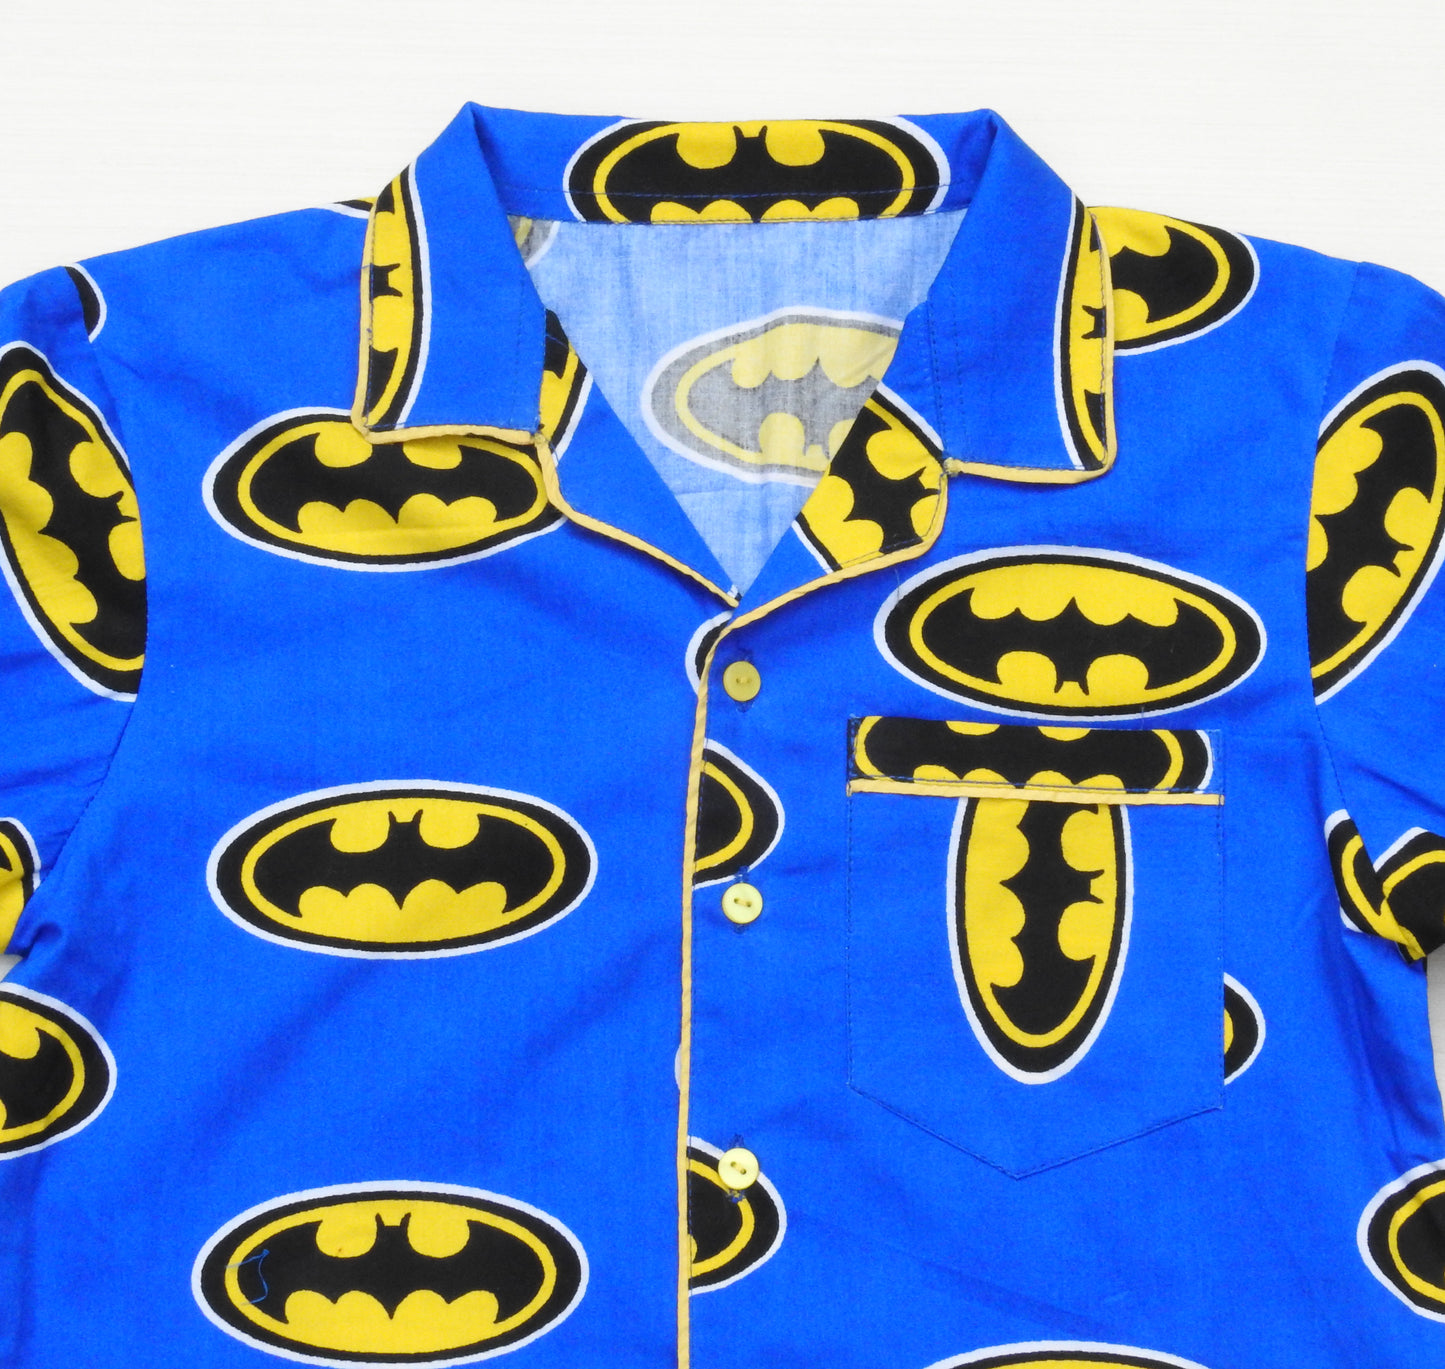 batman-night-suit-online-for-baby-boys